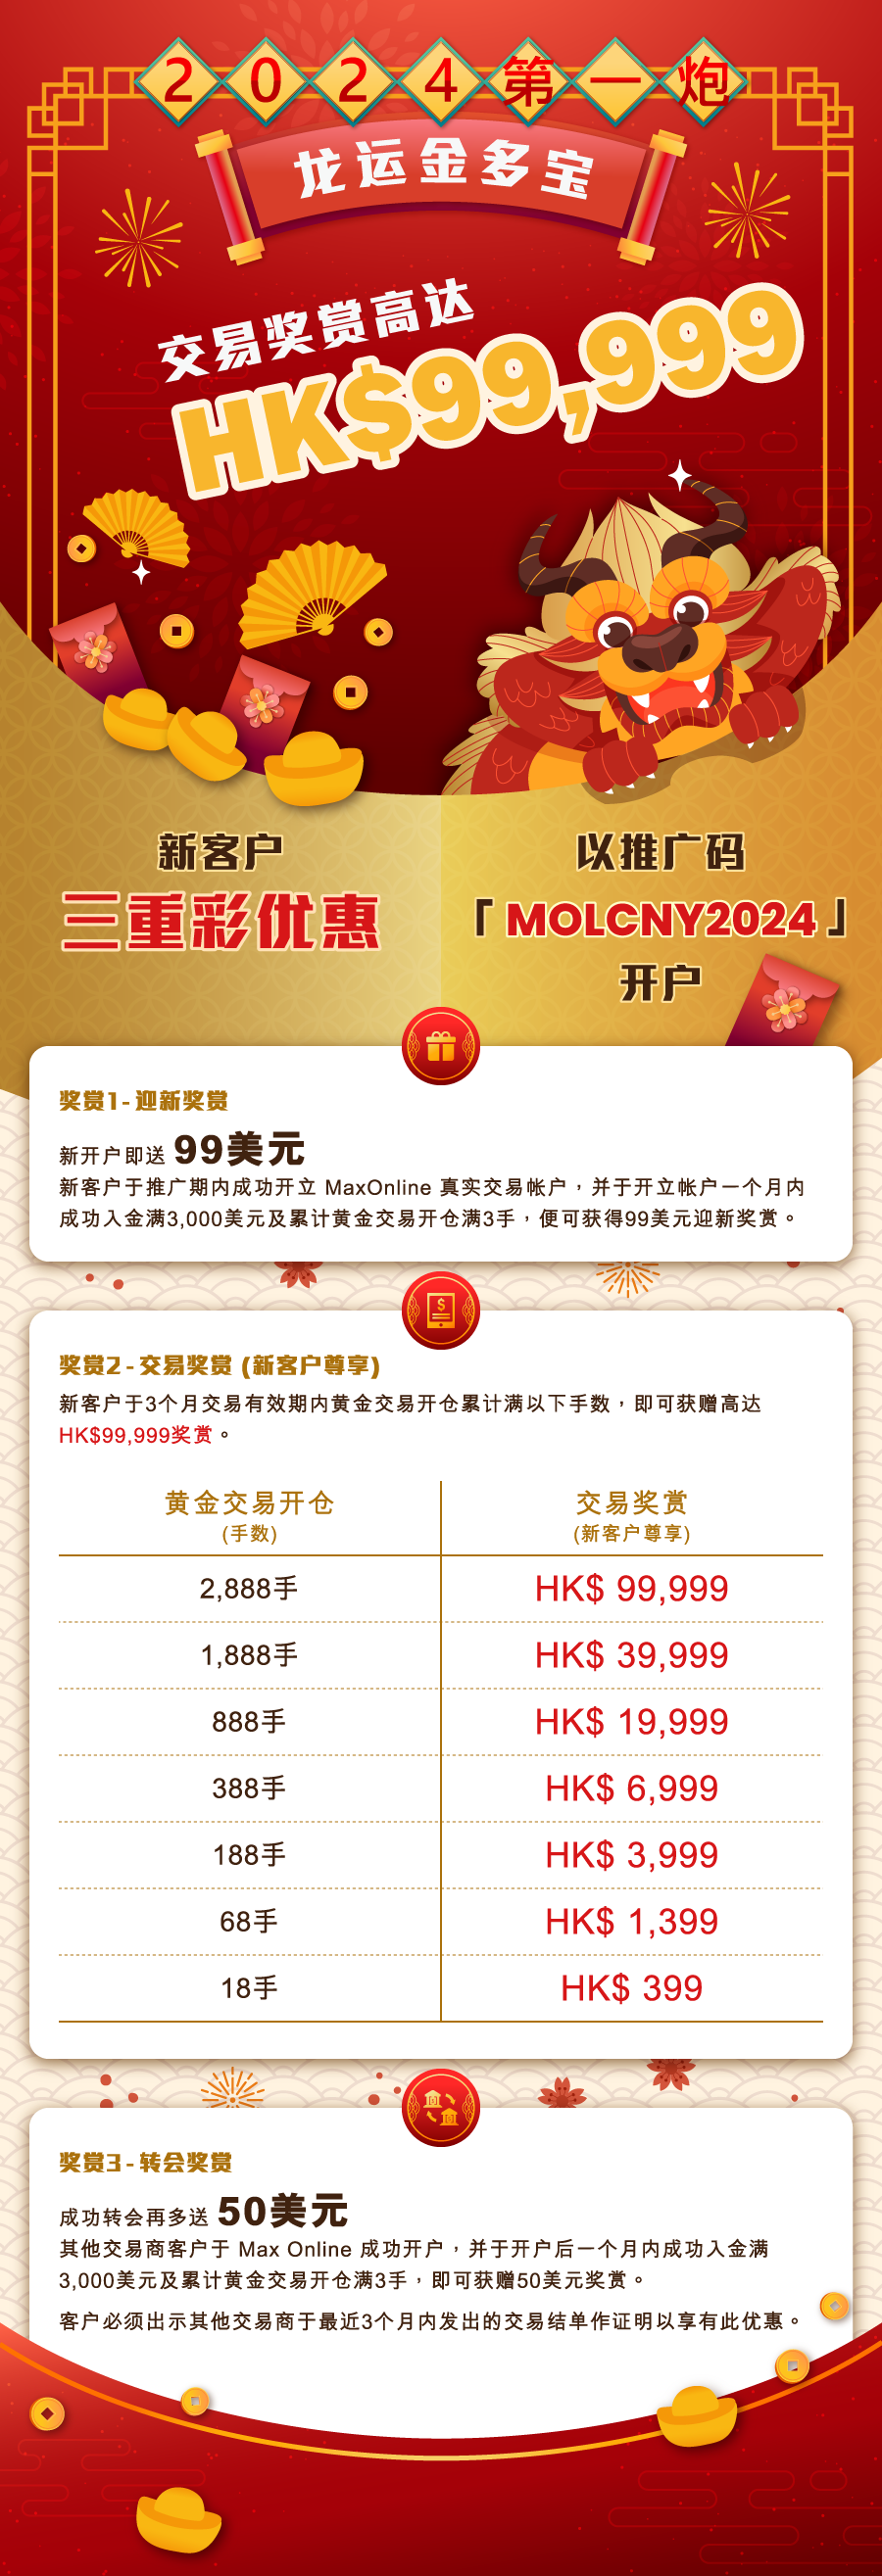 CNY2024_Promotion_New-Client-SC